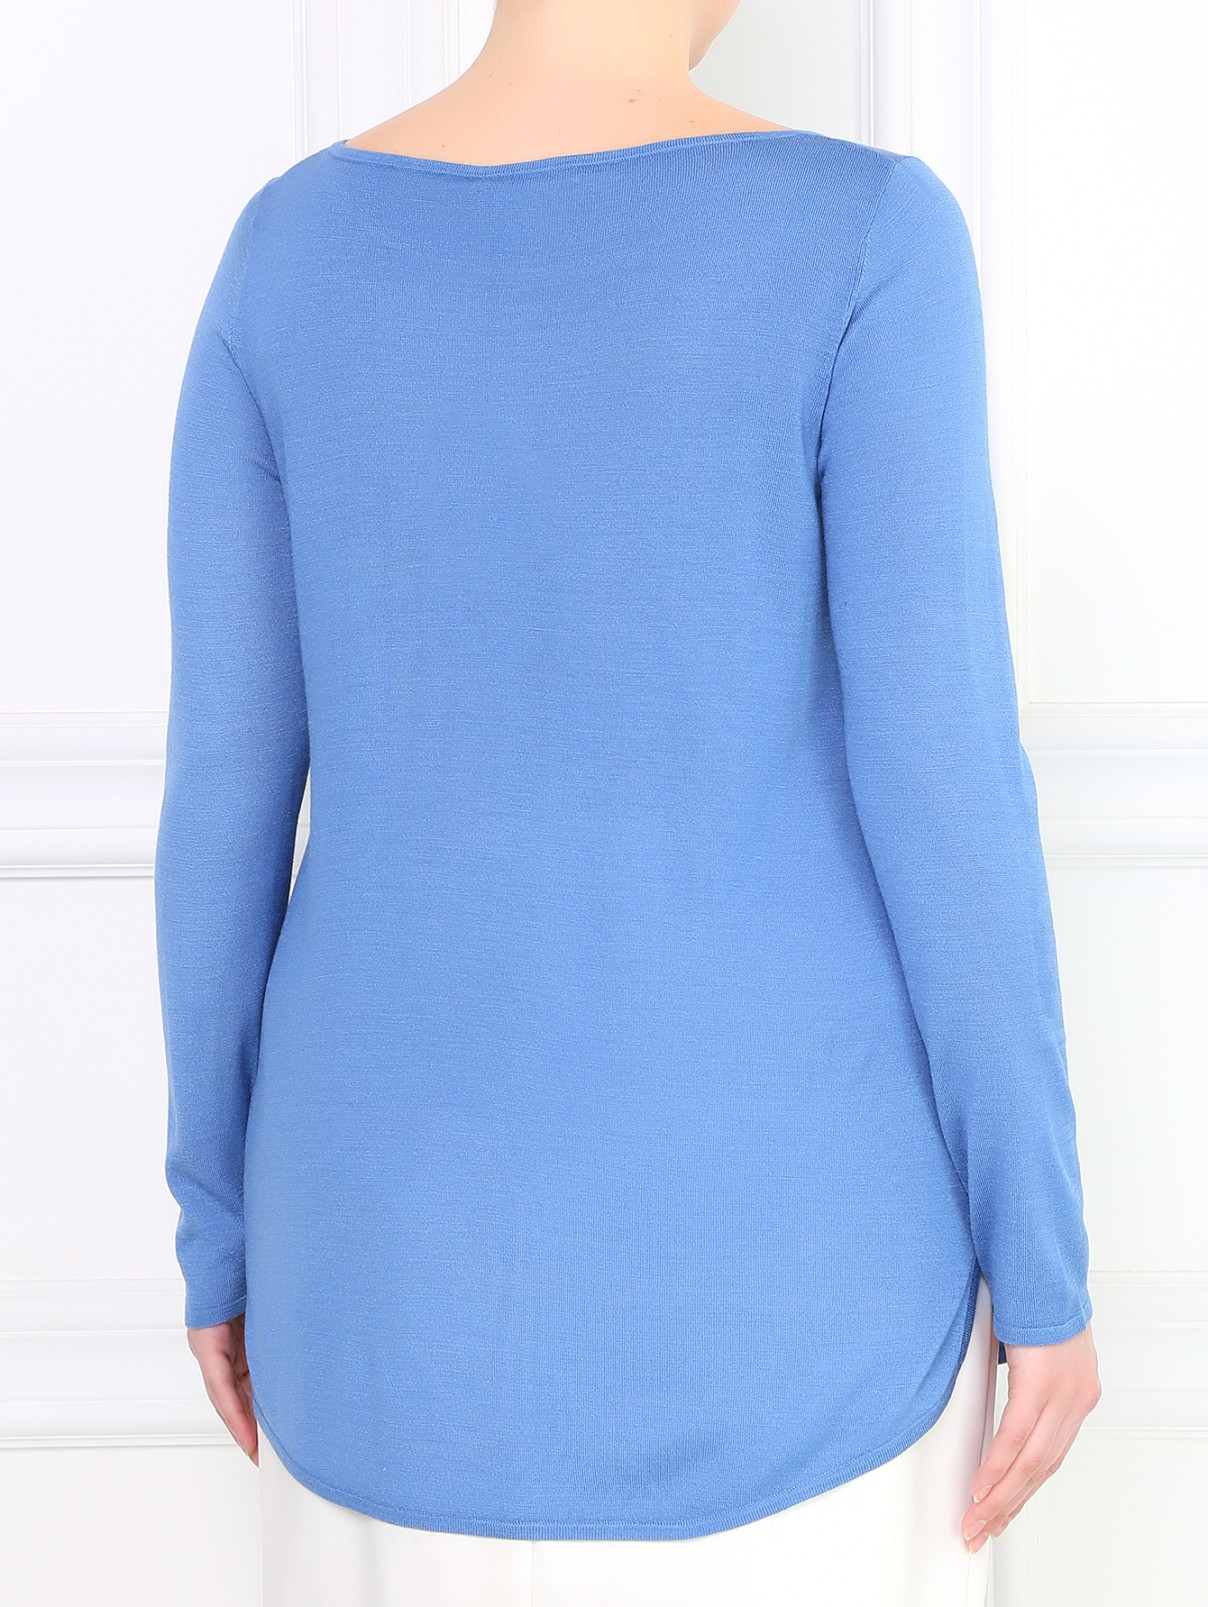 Джемпер из шелка Marina Rinaldi  –  Модель Верх-Низ1  – Цвет:  Синий